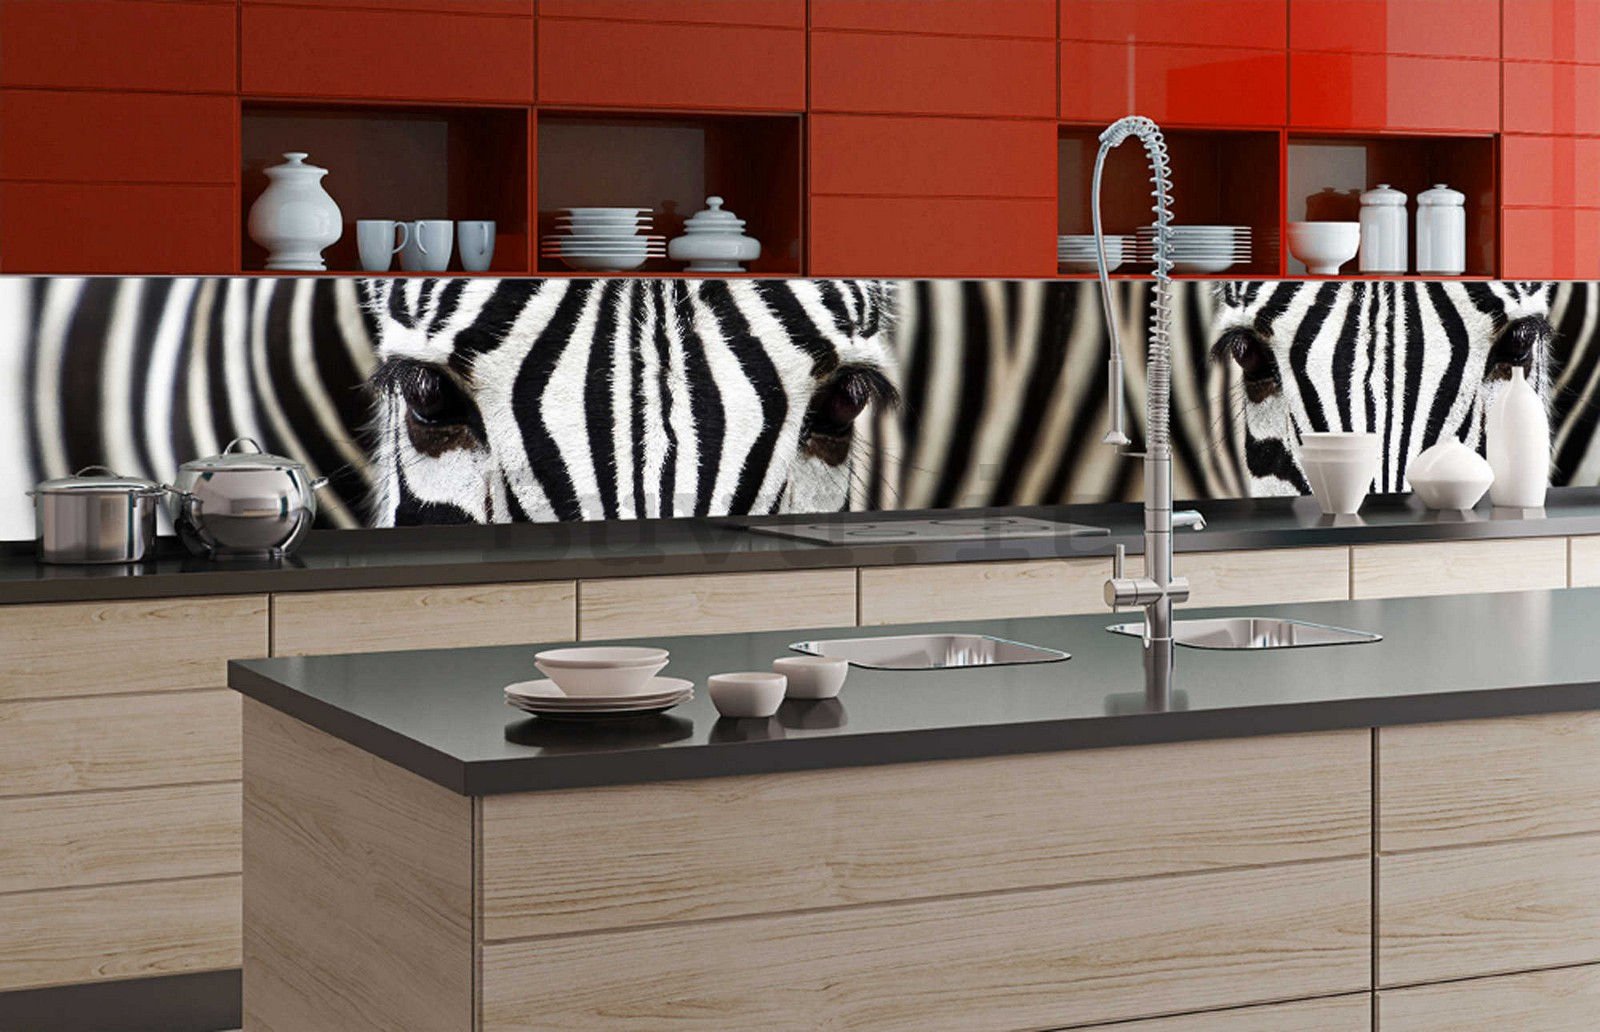 Fotomurale lavabile autoadesiva per cucina - Zebra, 350x60 cm